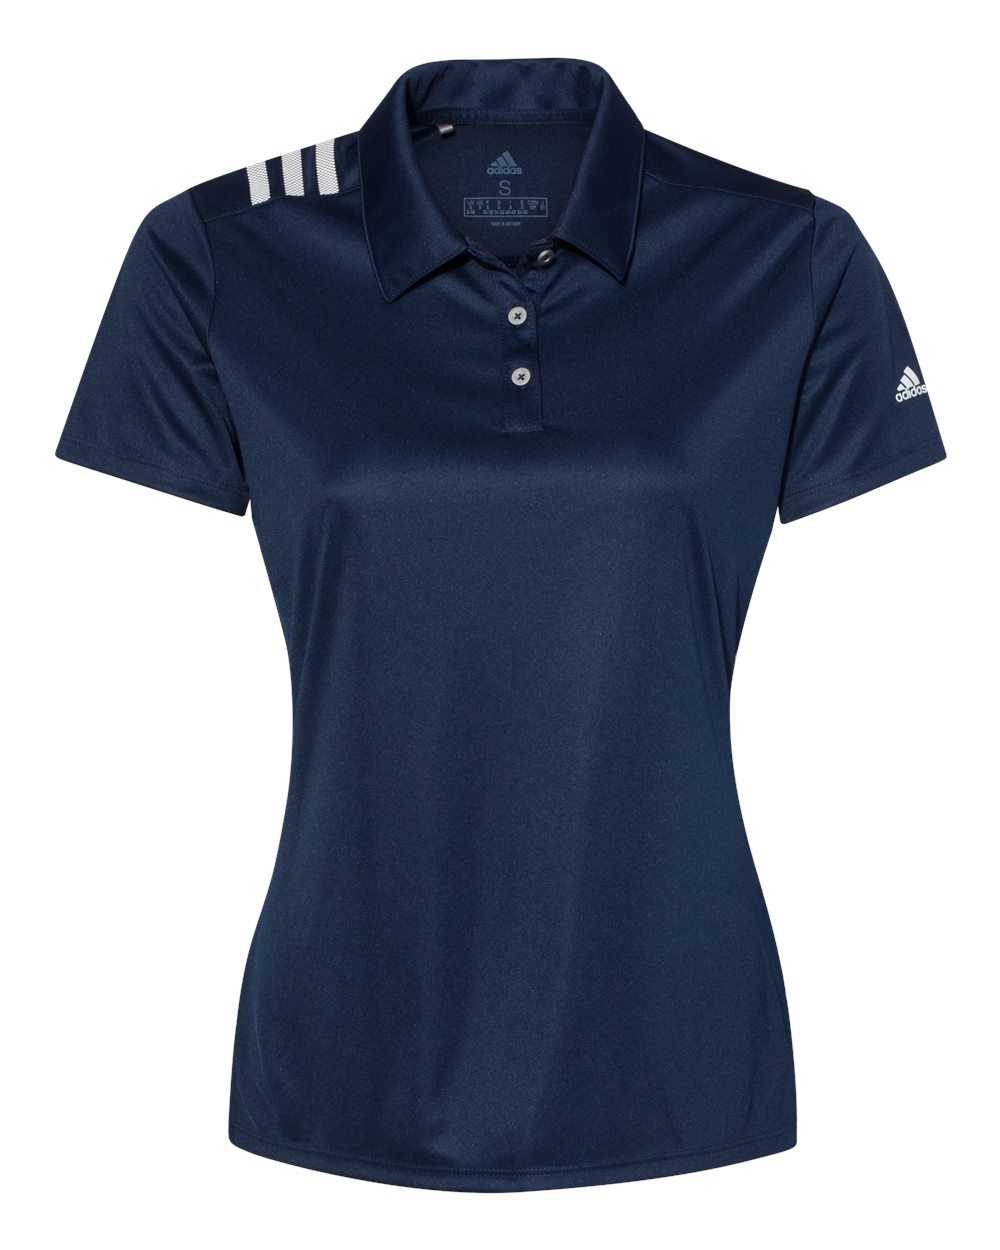 Adidas A325 Women's 3-Stripes Shoulder Sport Shirt - Collegiate Navy White - HIT a Double